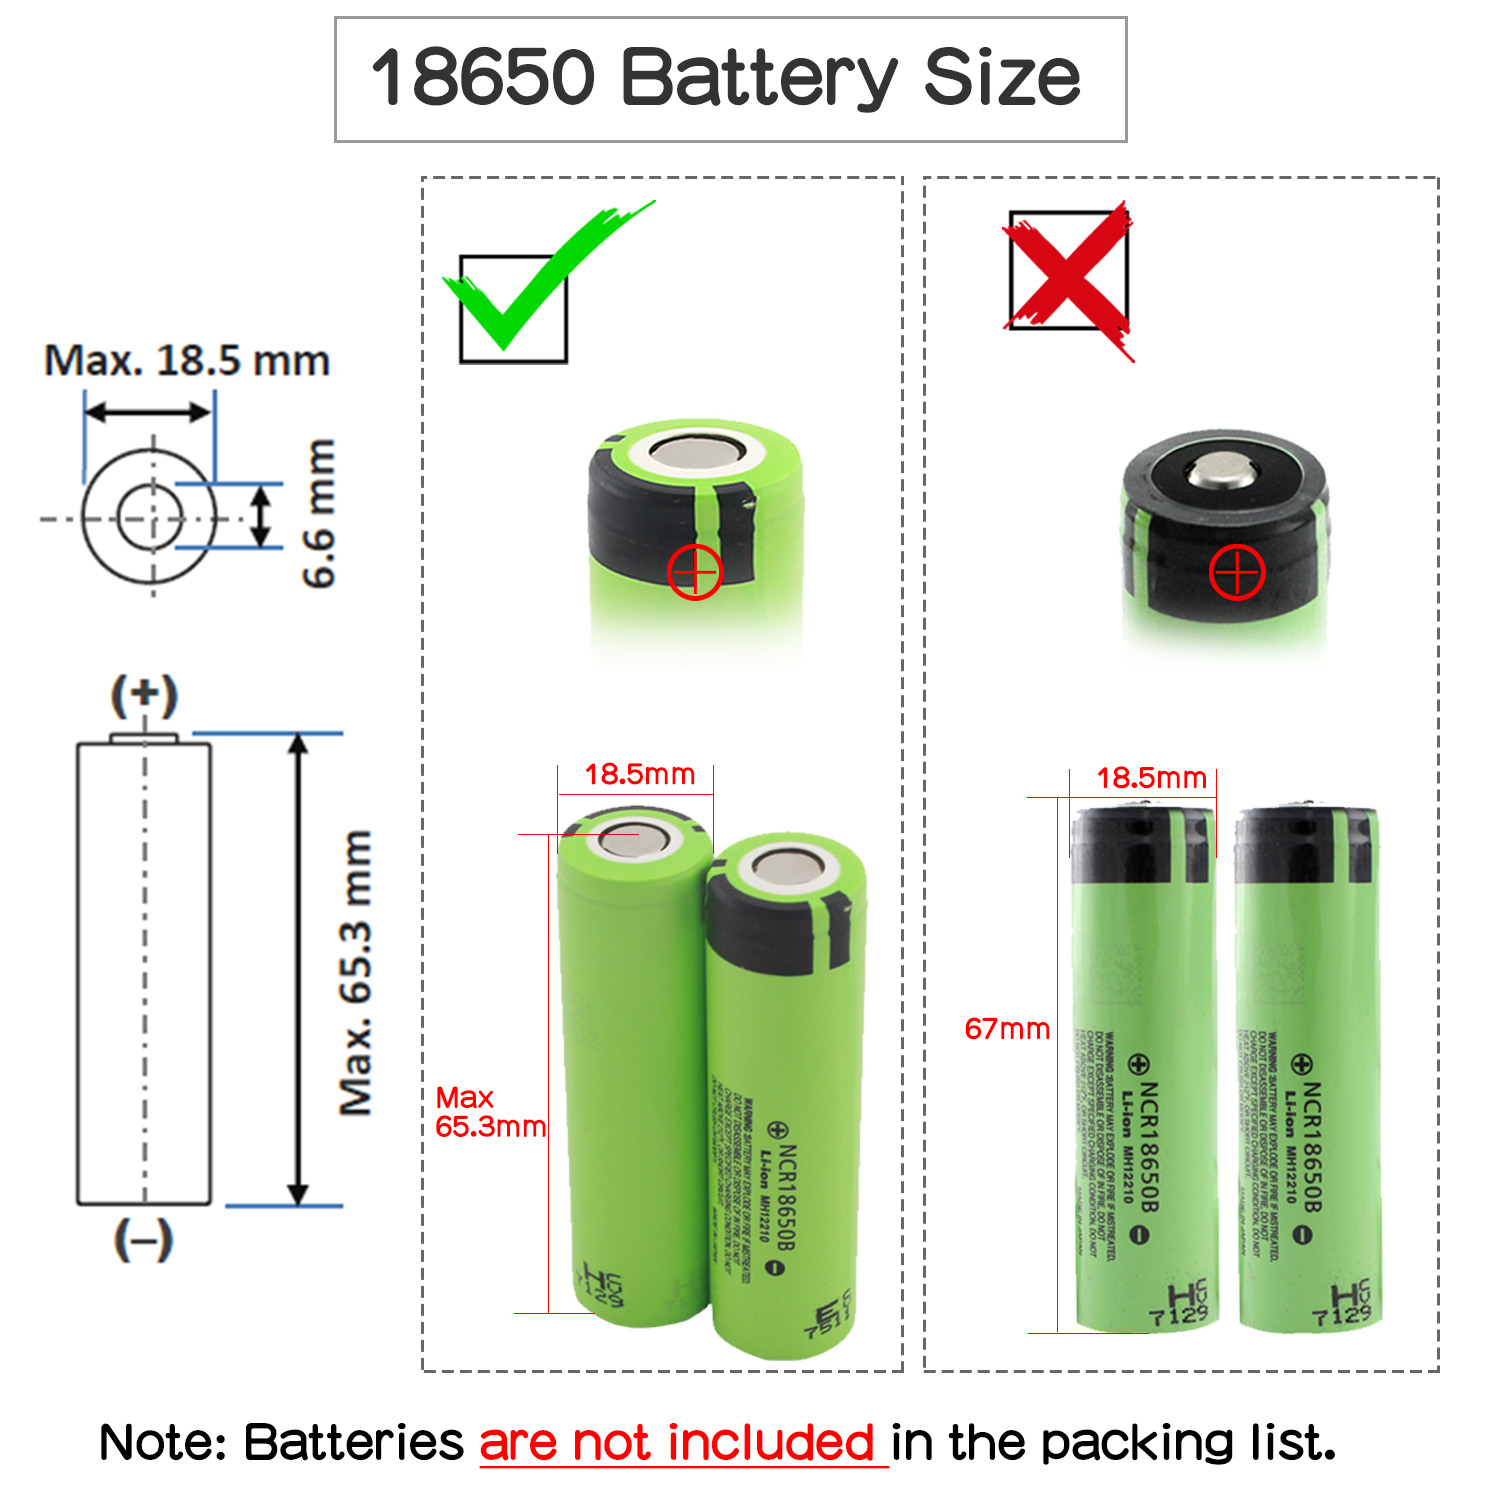 Mg4 battery size